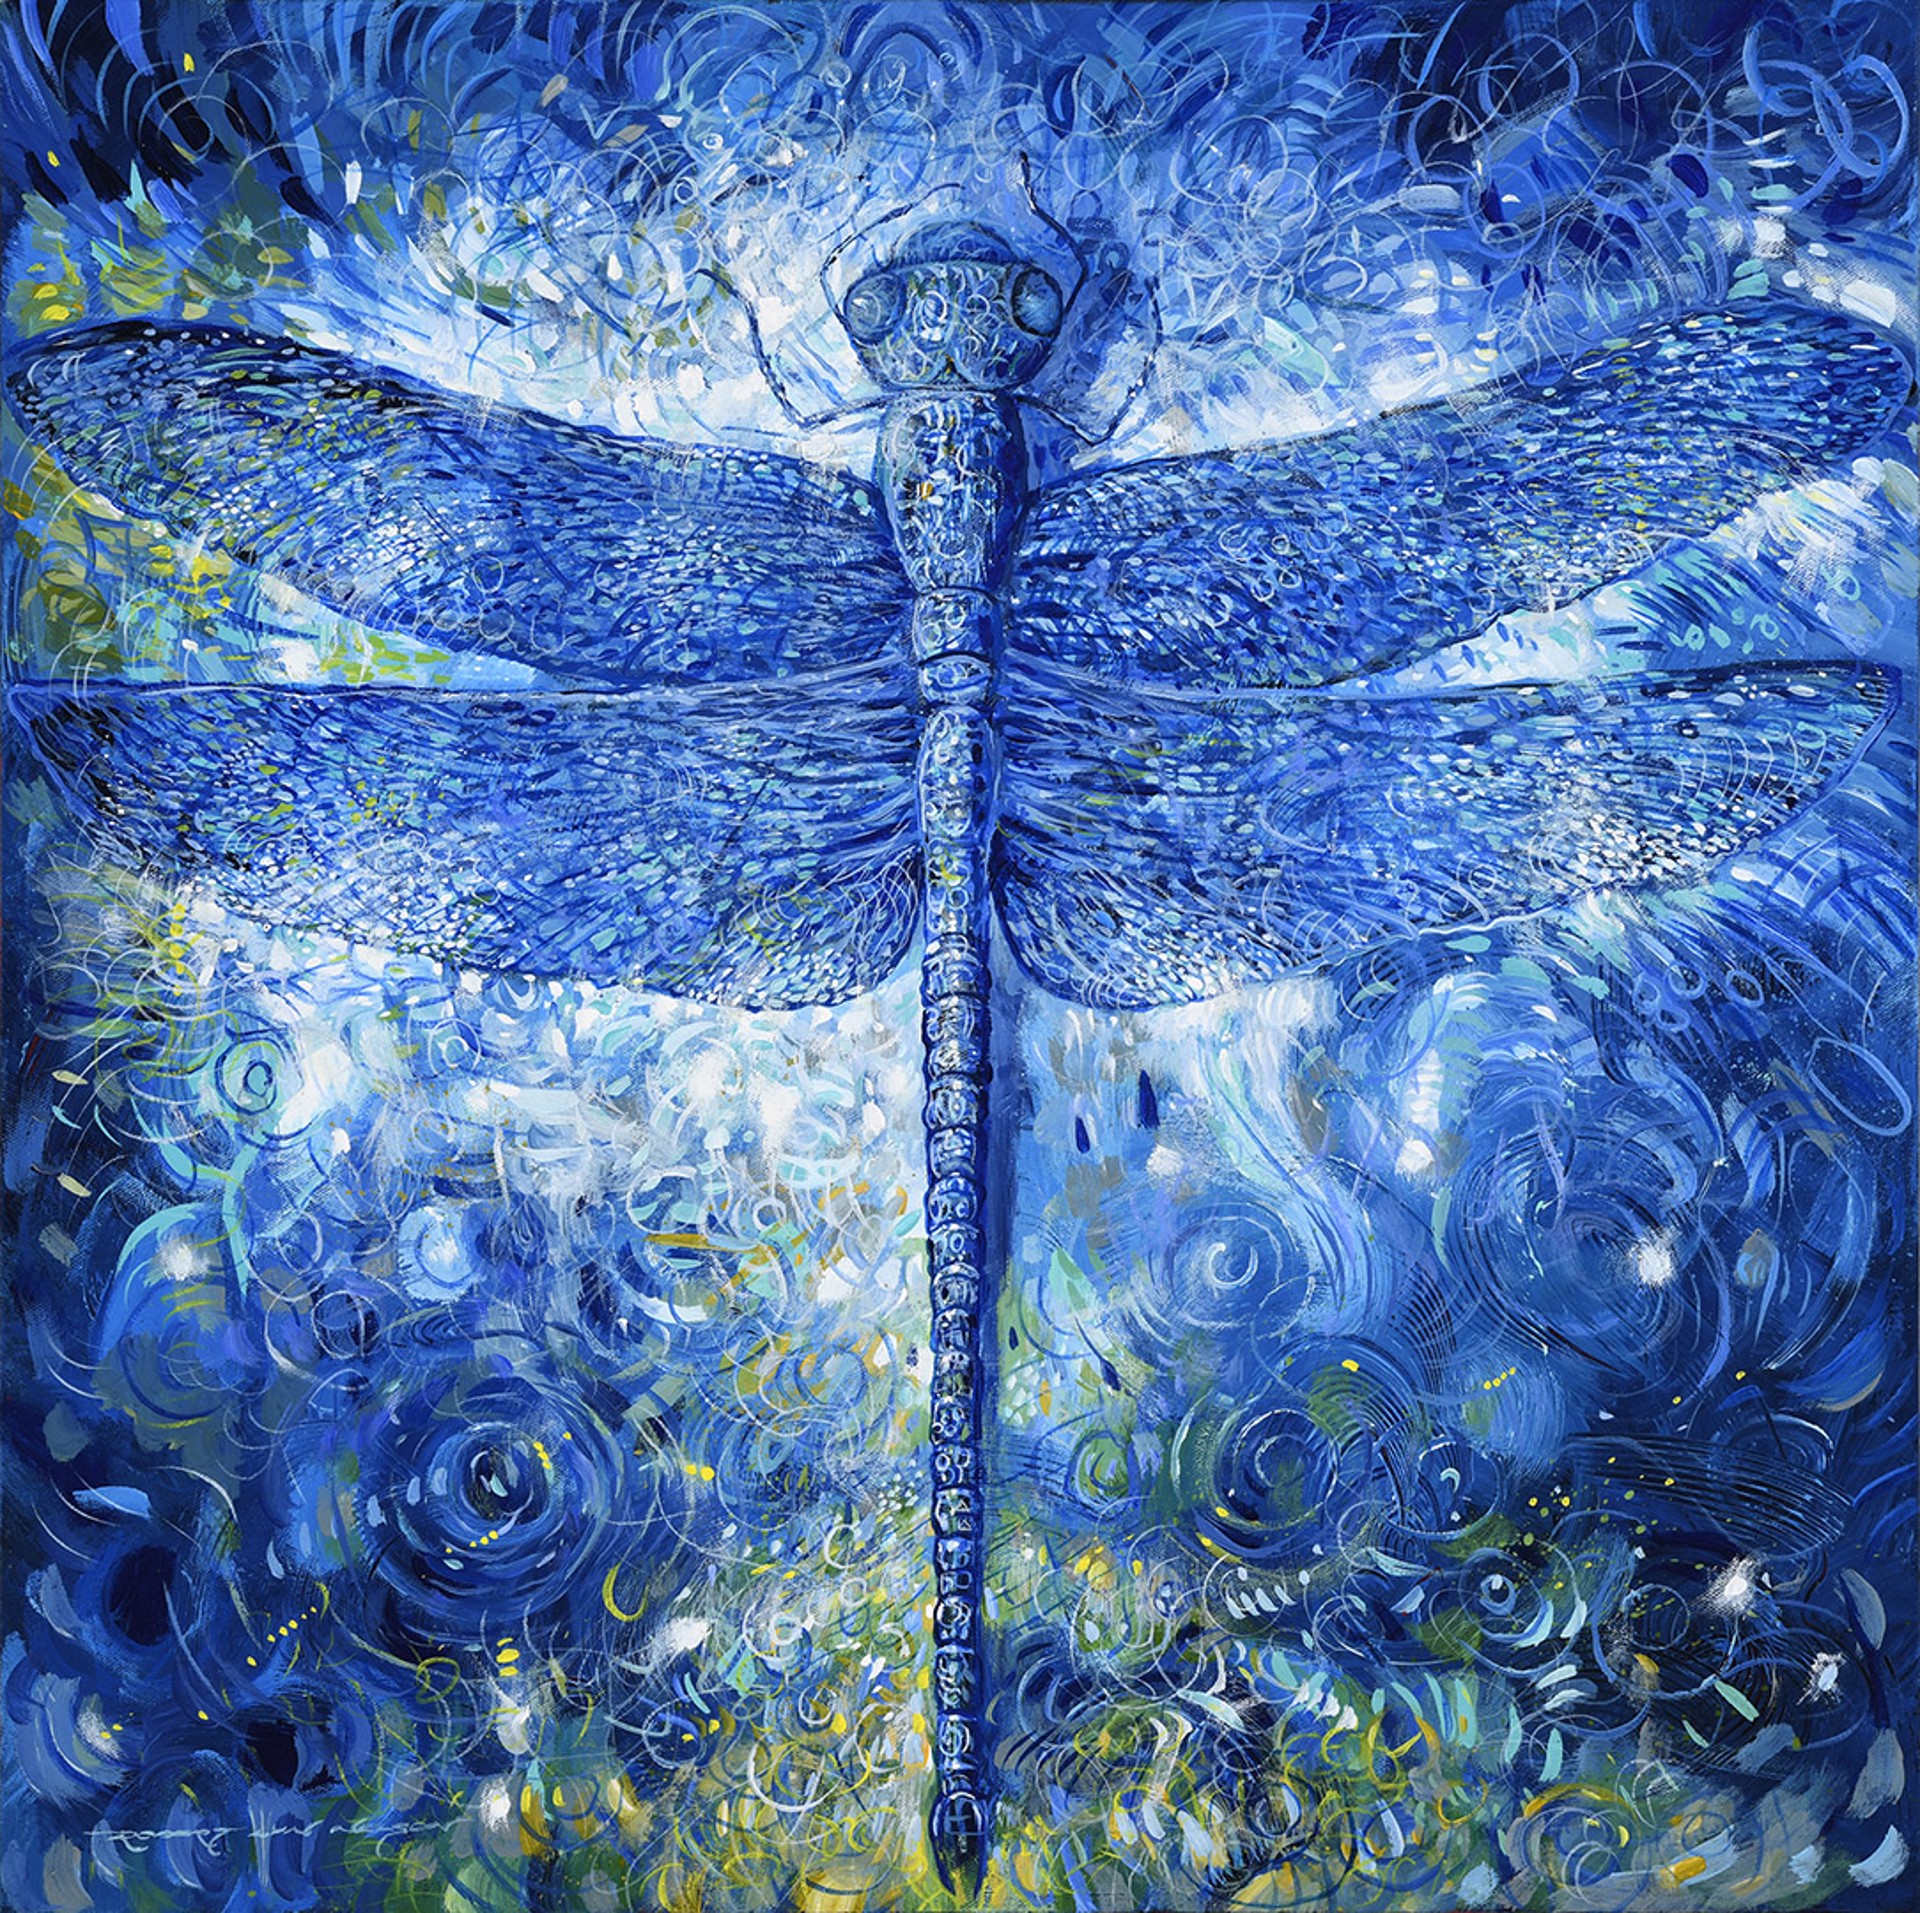 Blue Dragon by Robert Lyn Nelson